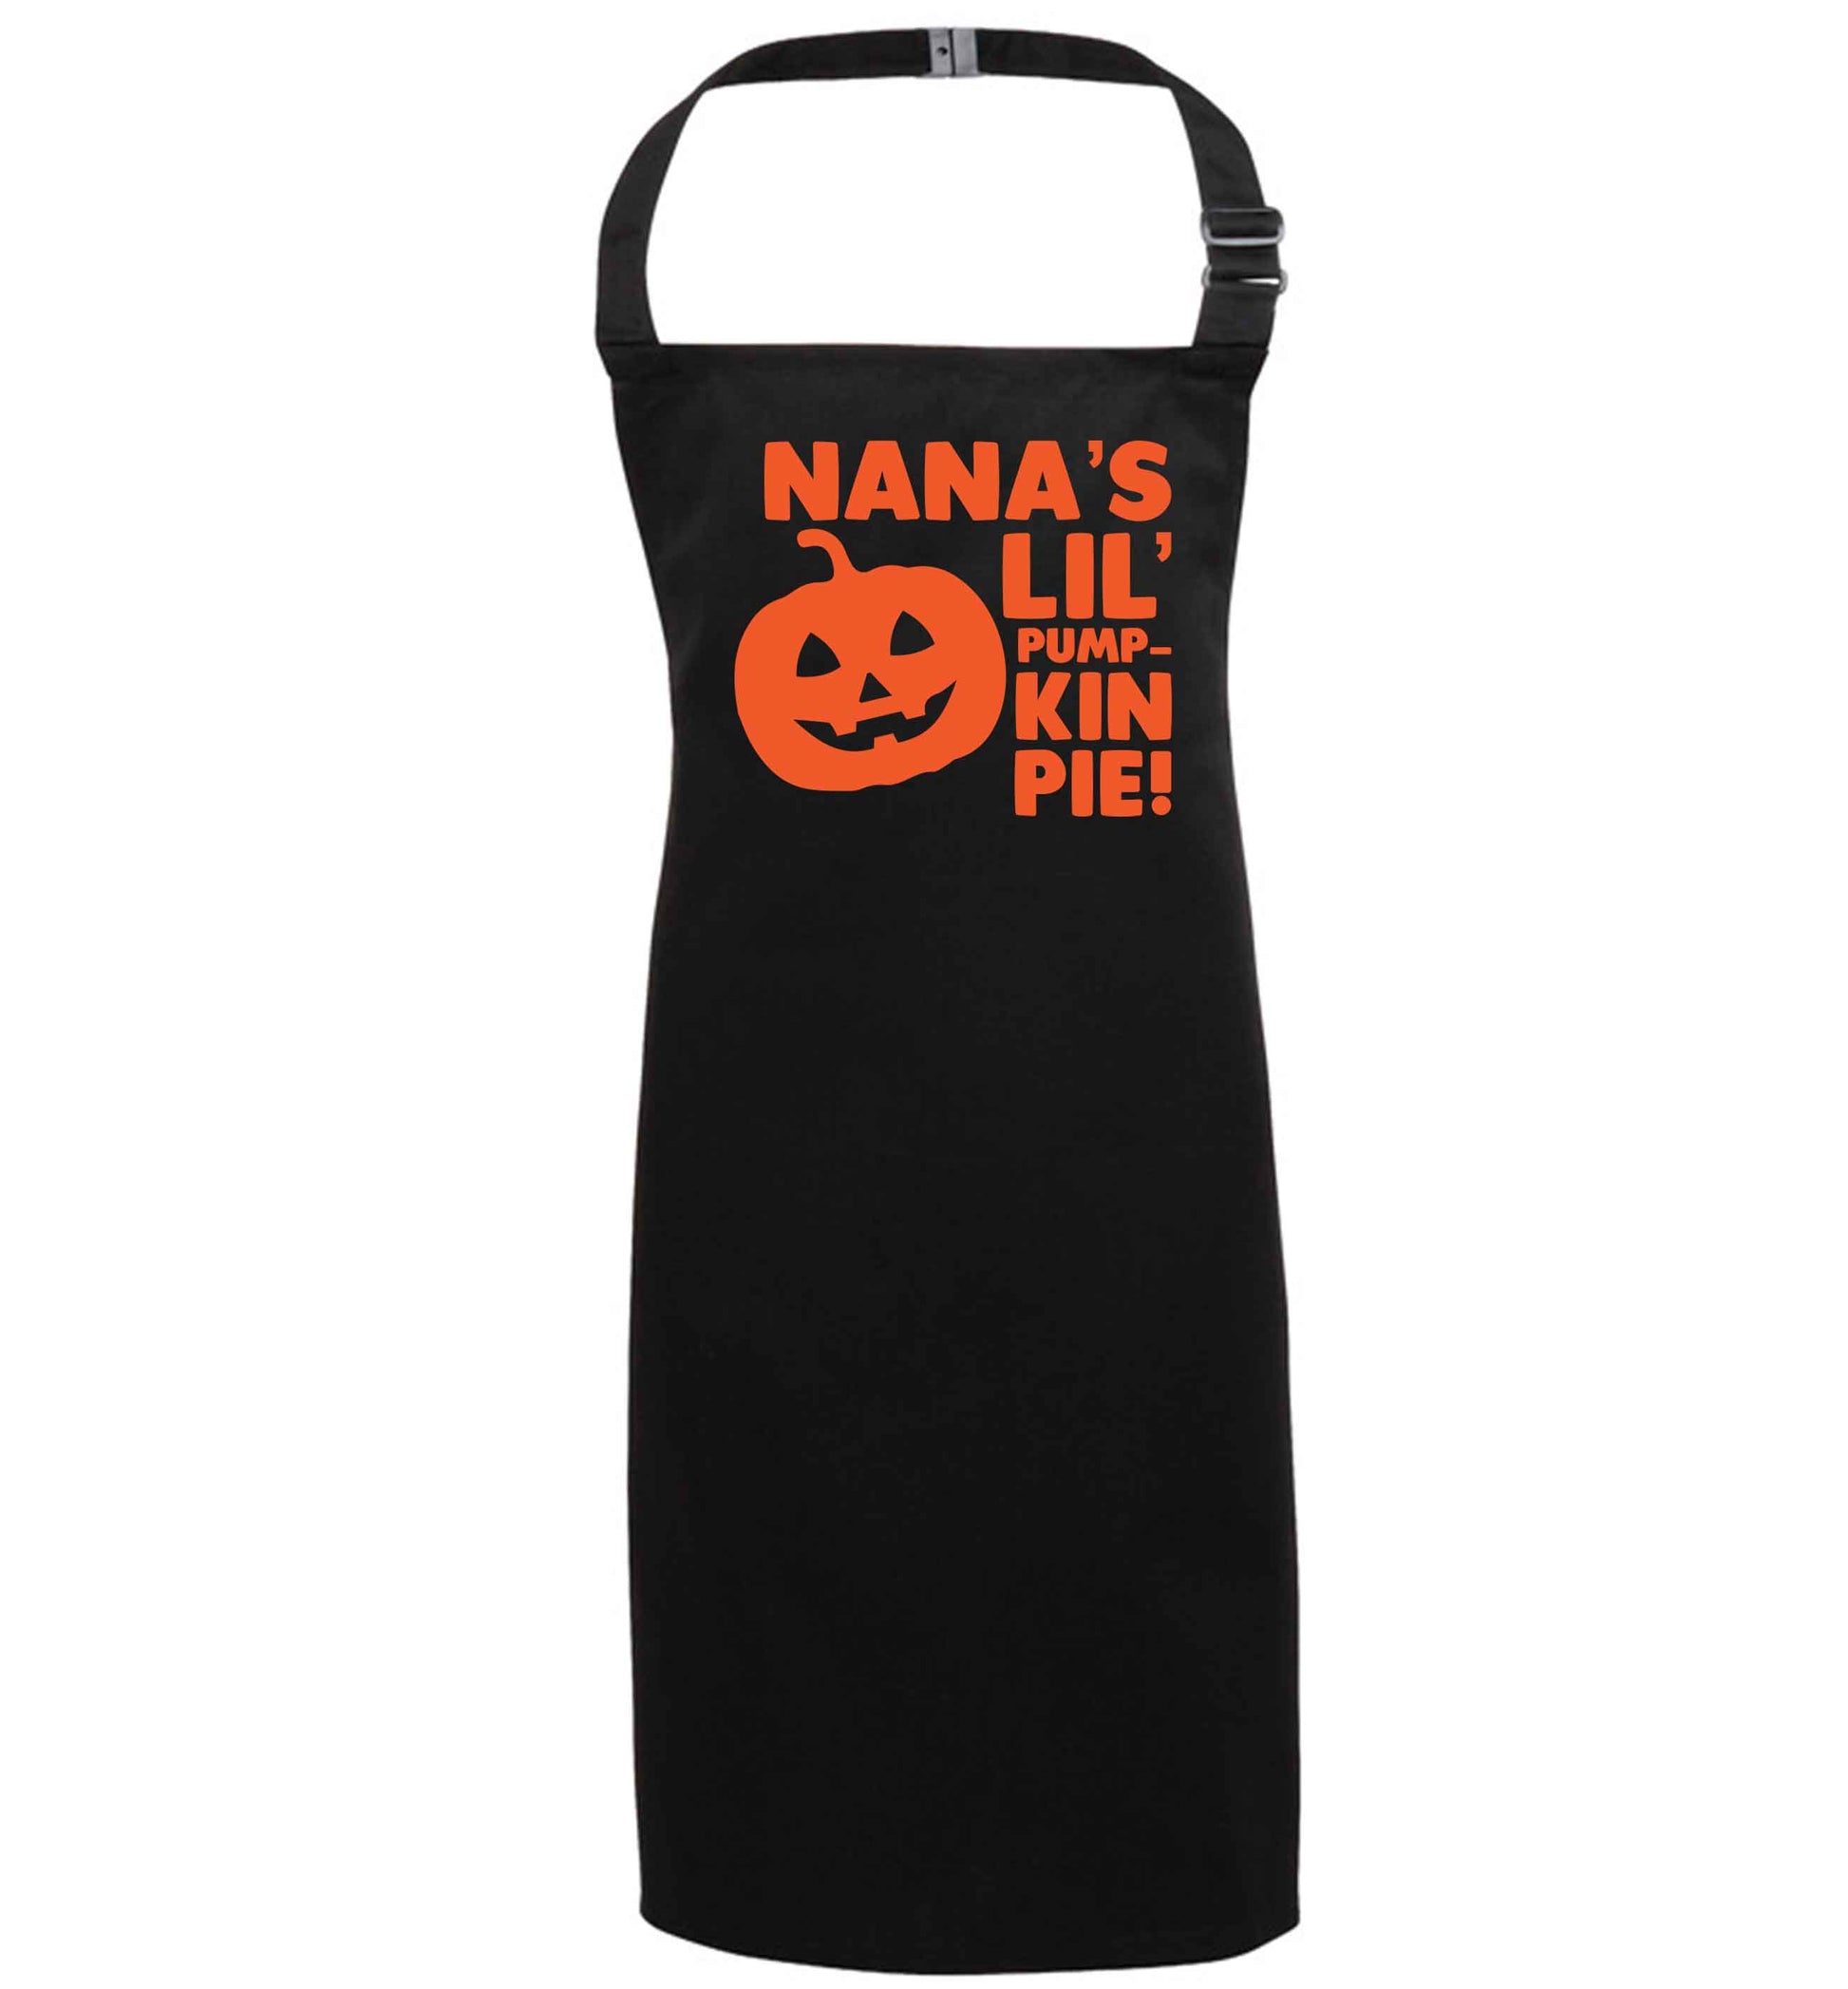 Nana's lil' pumpkin pie black apron 7-10 years